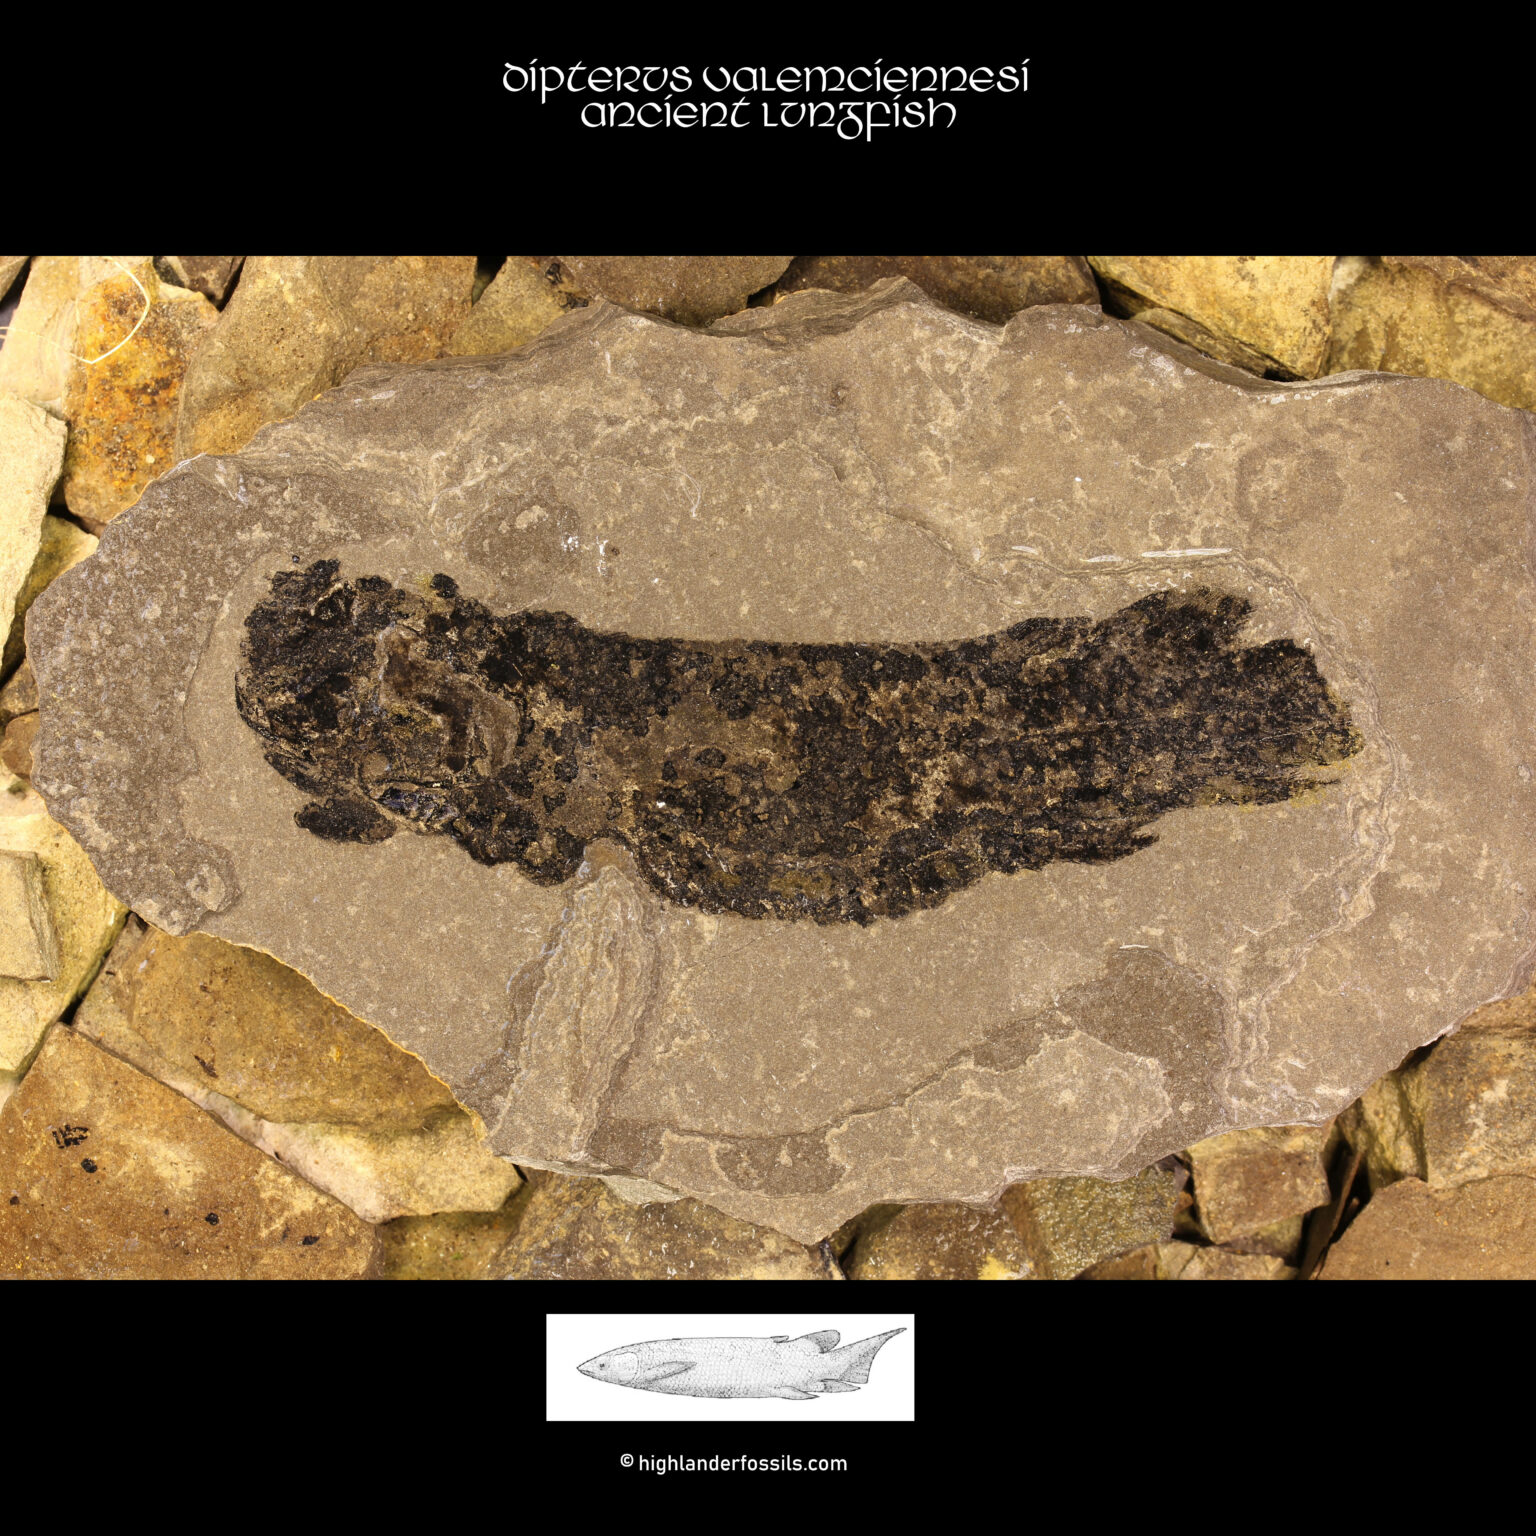 Fossil-fish-Dipterus-valenciennesi-Ancient-Lungfish